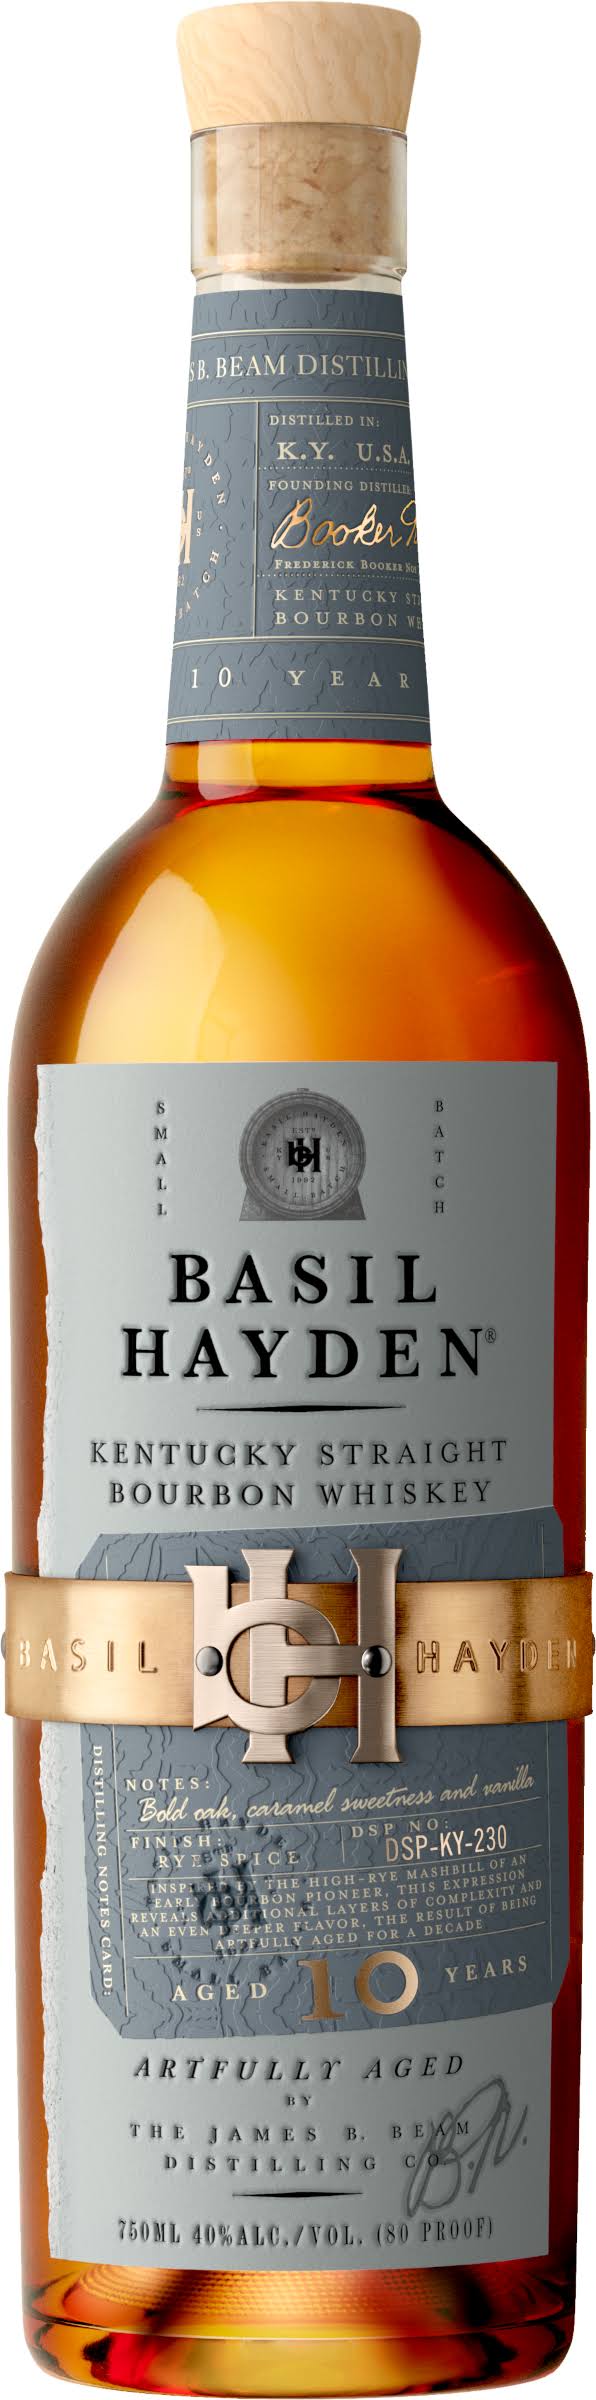 BASIL HAYDEN'S 10 YEAR OLD BOURBON